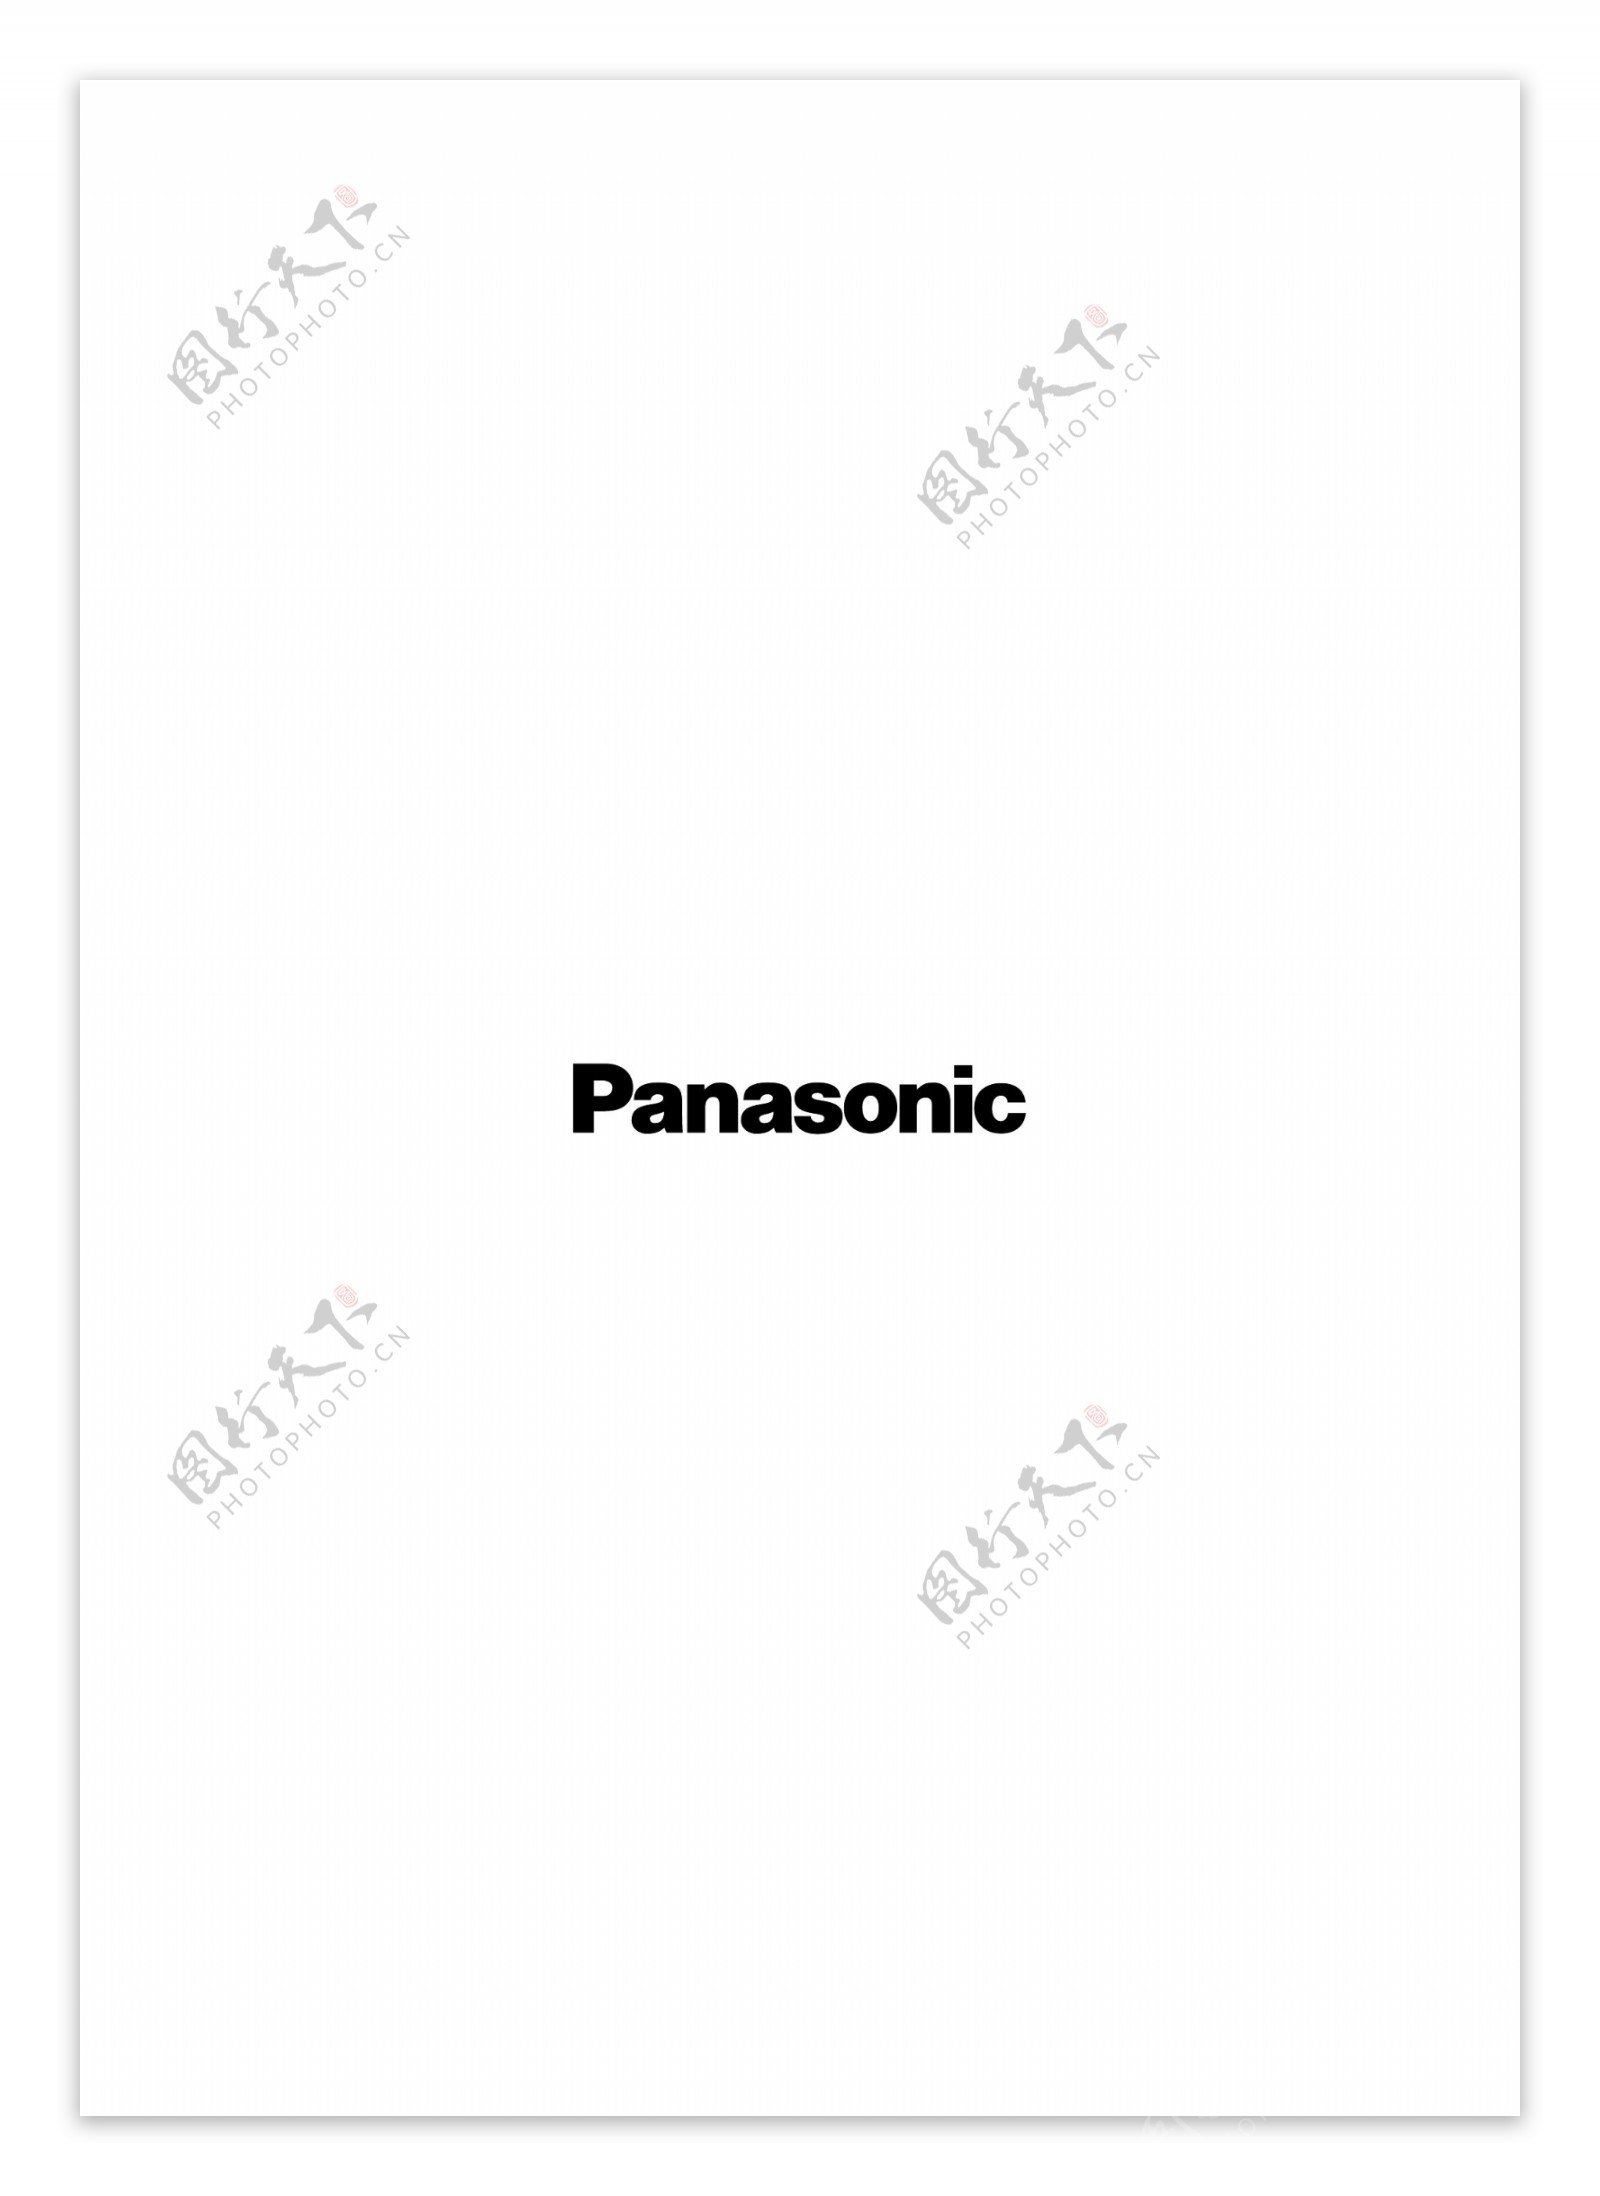 Panasoniclogo设计欣赏Panasonic轻工业LOGO下载标志设计欣赏